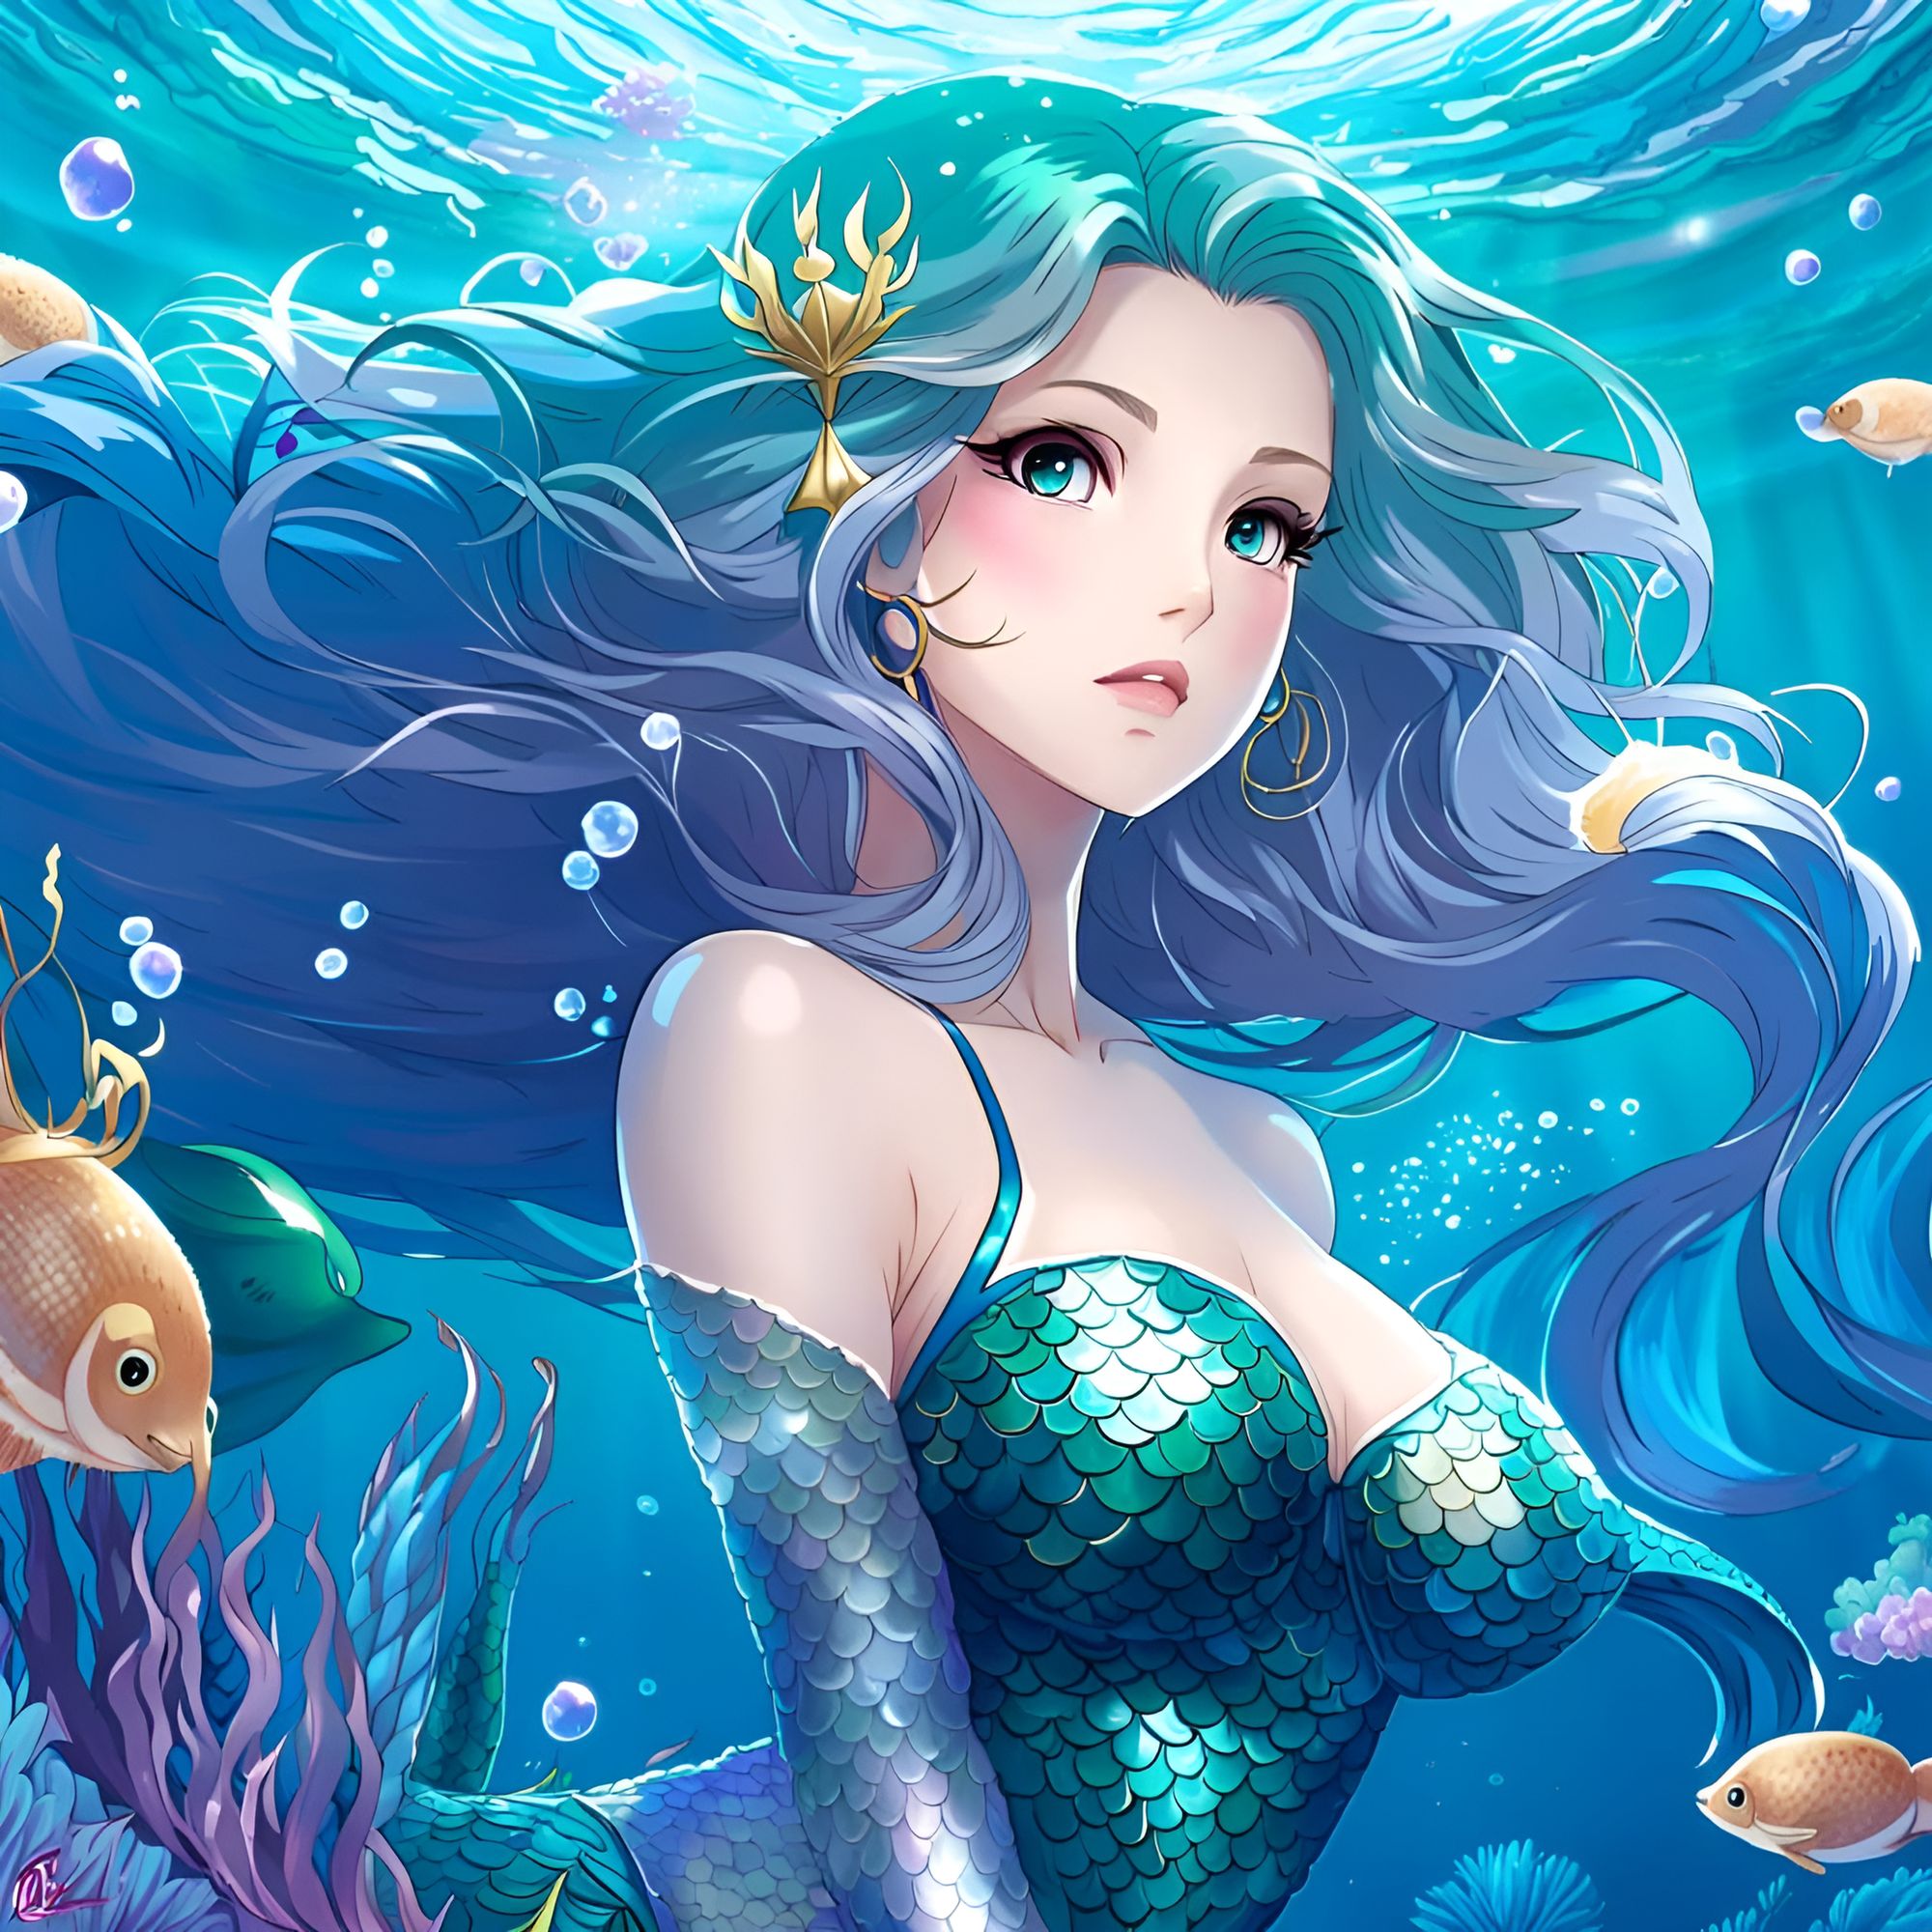 Art by Vertigo | Anime mermaid, Anime mermaid female, Mermaid anime